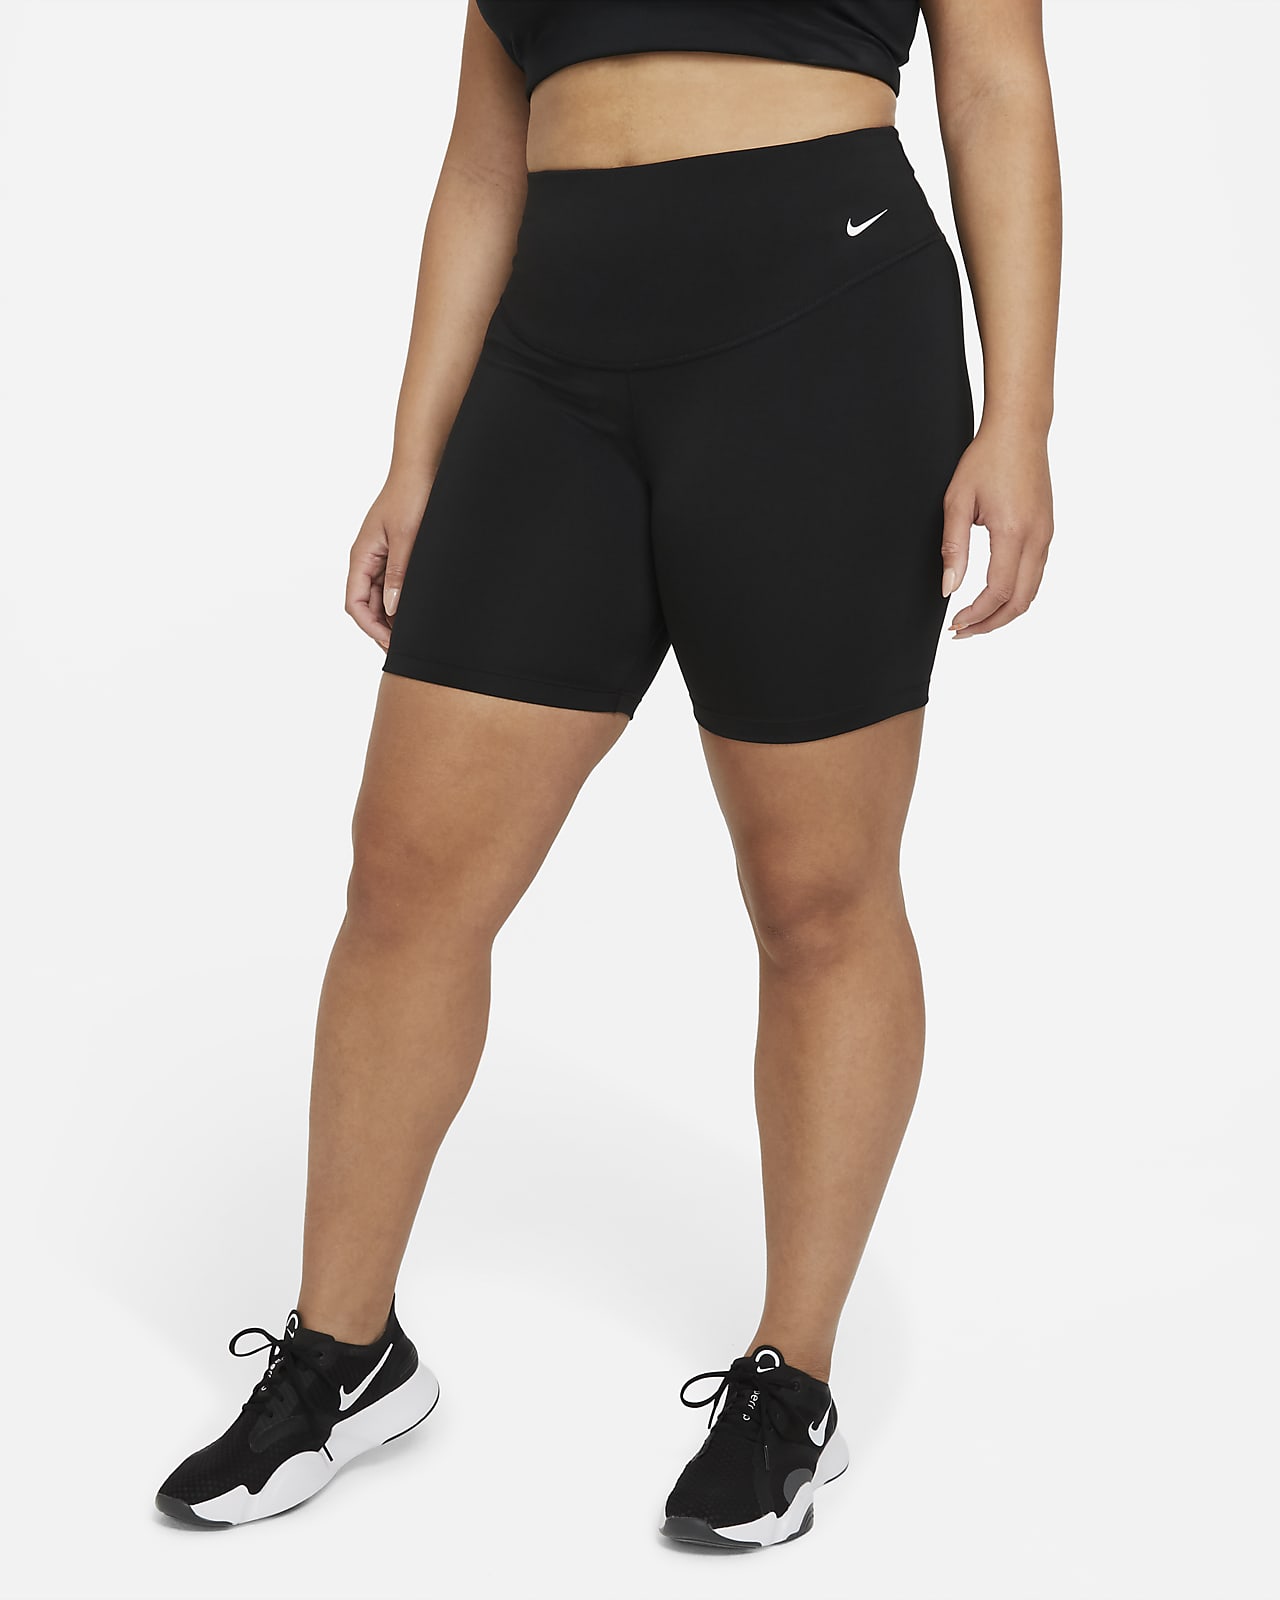 organisere Kort levetid tilskuer Nike One-cykelshorts med mellemhøj talje (18 cm) til kvinder (Plus size).  Nike DK